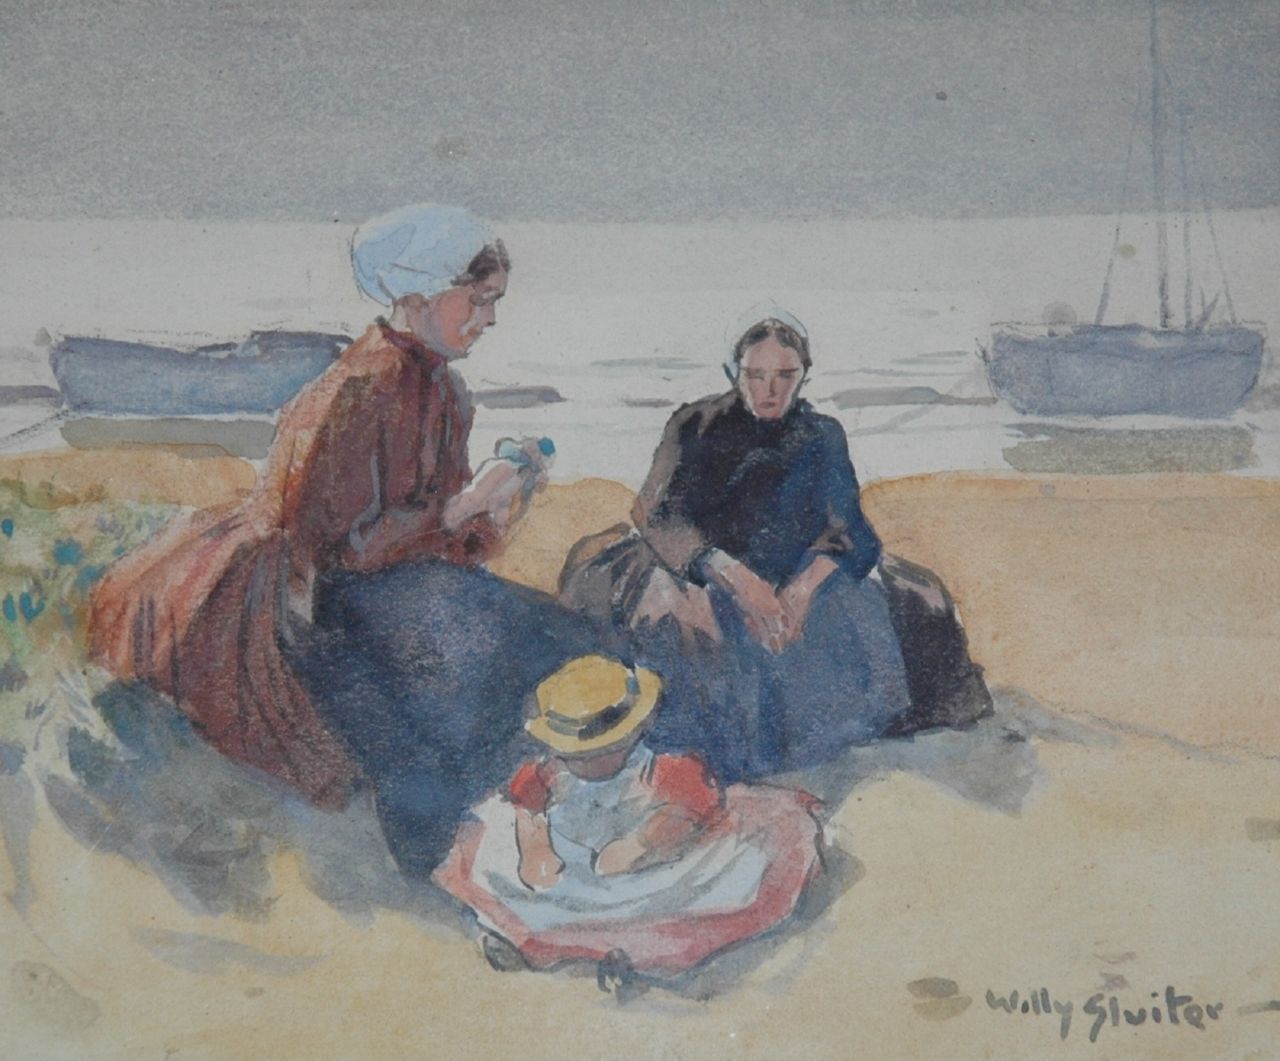 Sluiter J.W.  | Jan Willem 'Willy' Sluiter, Fisherwomen in the dunes, watercolour on paper 11.0 x 13.5 cm, signed l.r.